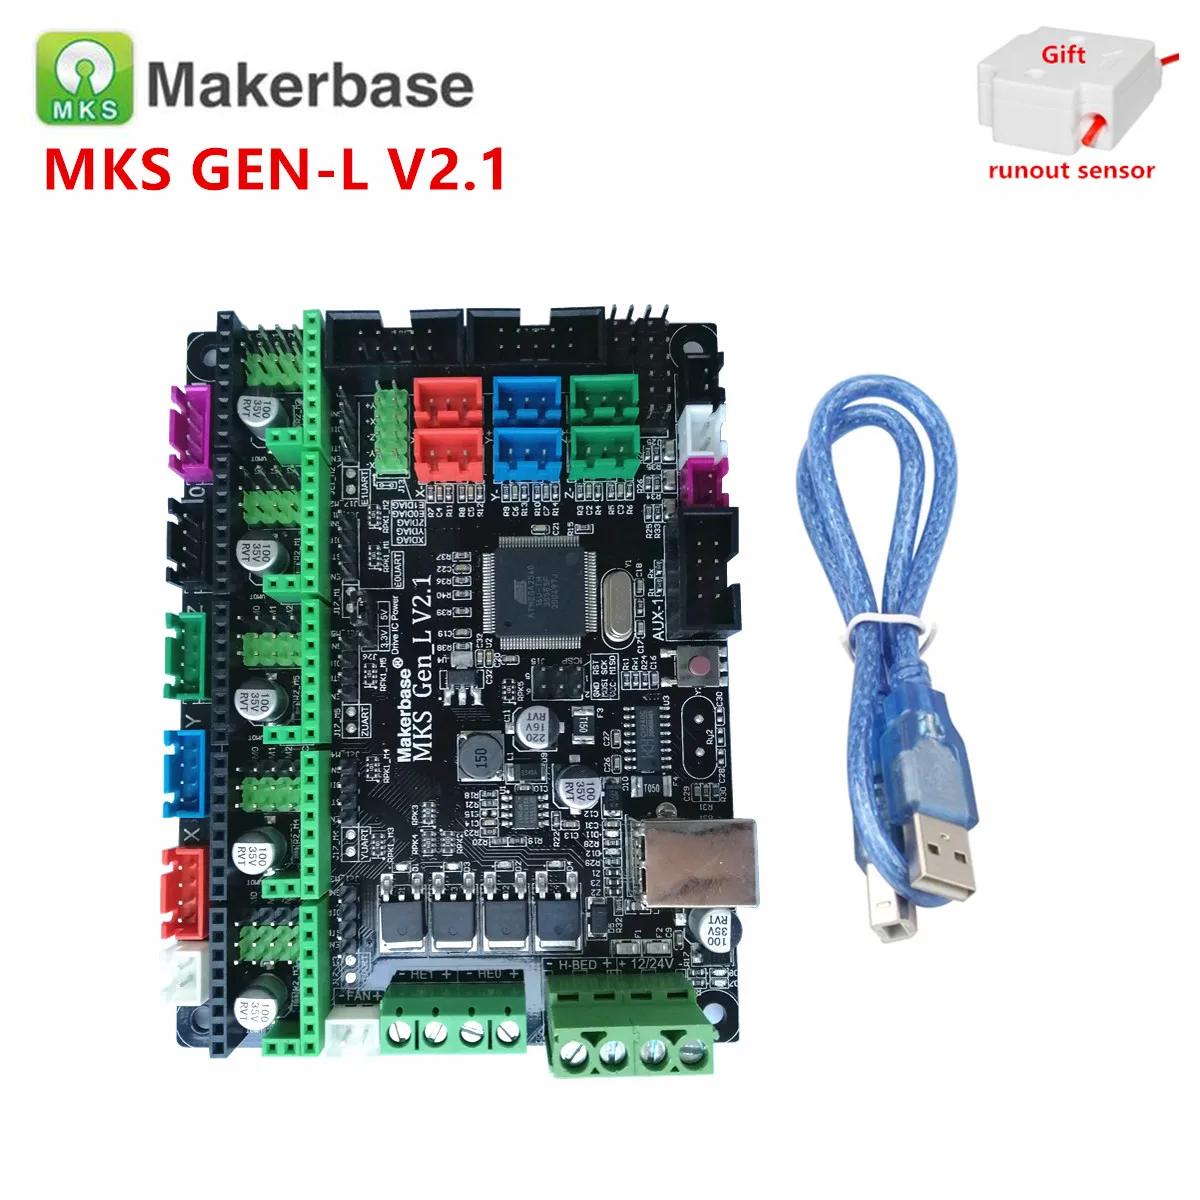 Makerbase-panel de control de impresora 3D MKS GEN L V2.1, placa base diy, piezas de arranque, compatible con a4988, drv8825, tmc2209, tmc2208, tmc2130